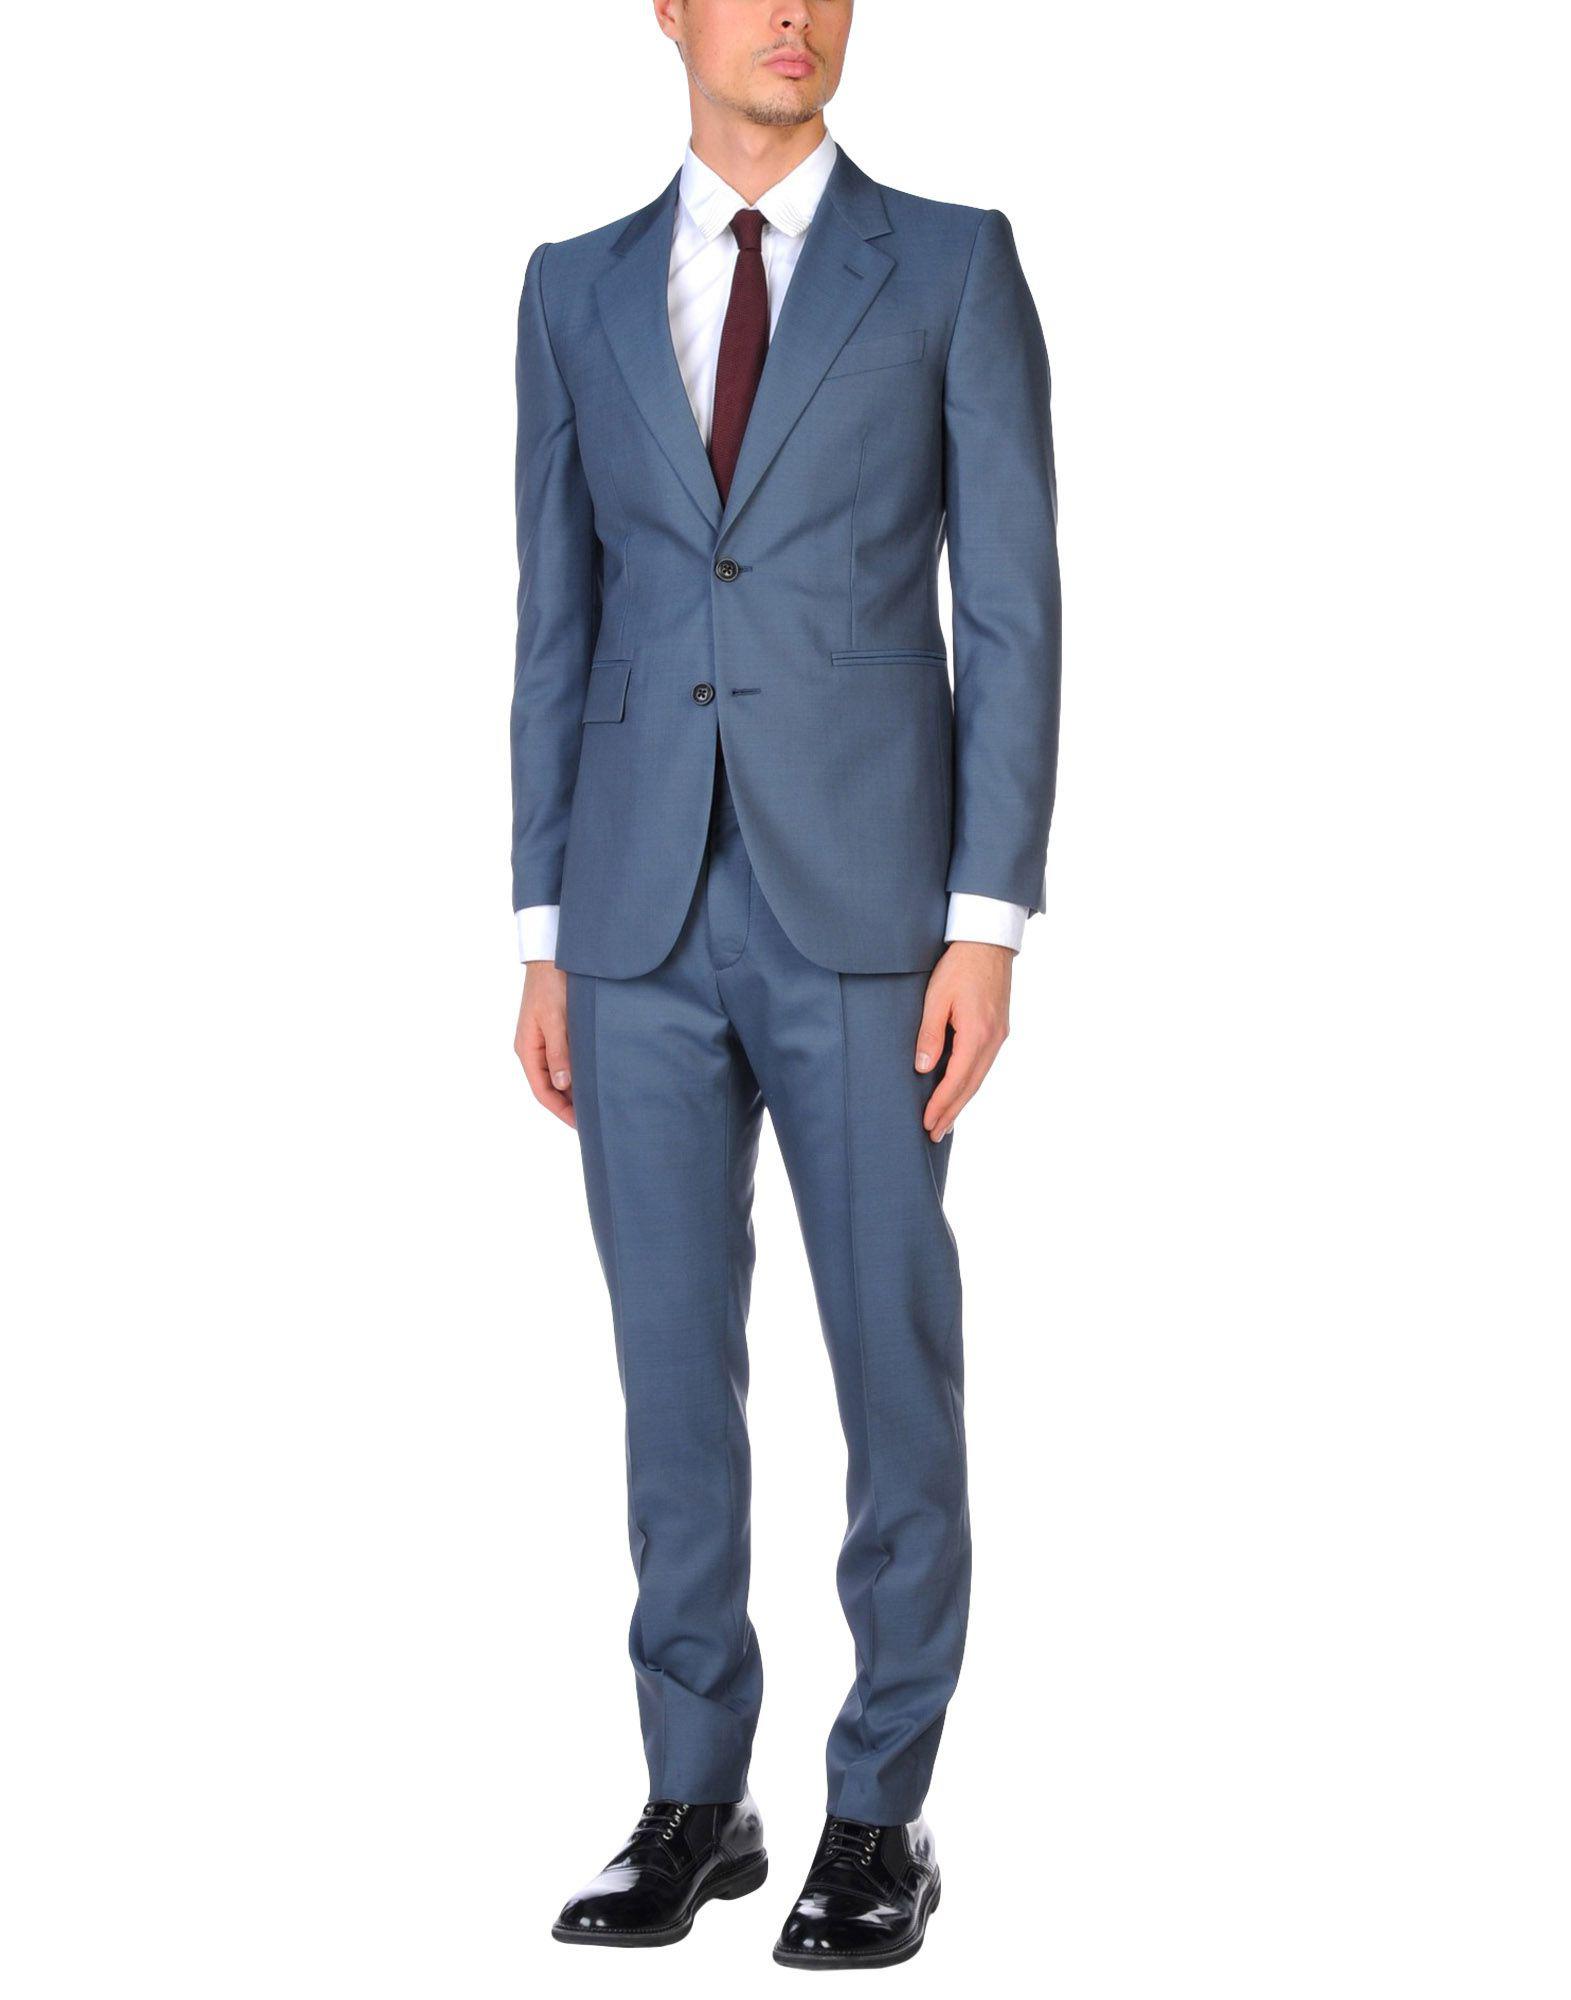 Lyst - Marc jacobs Suit in Blue for Men